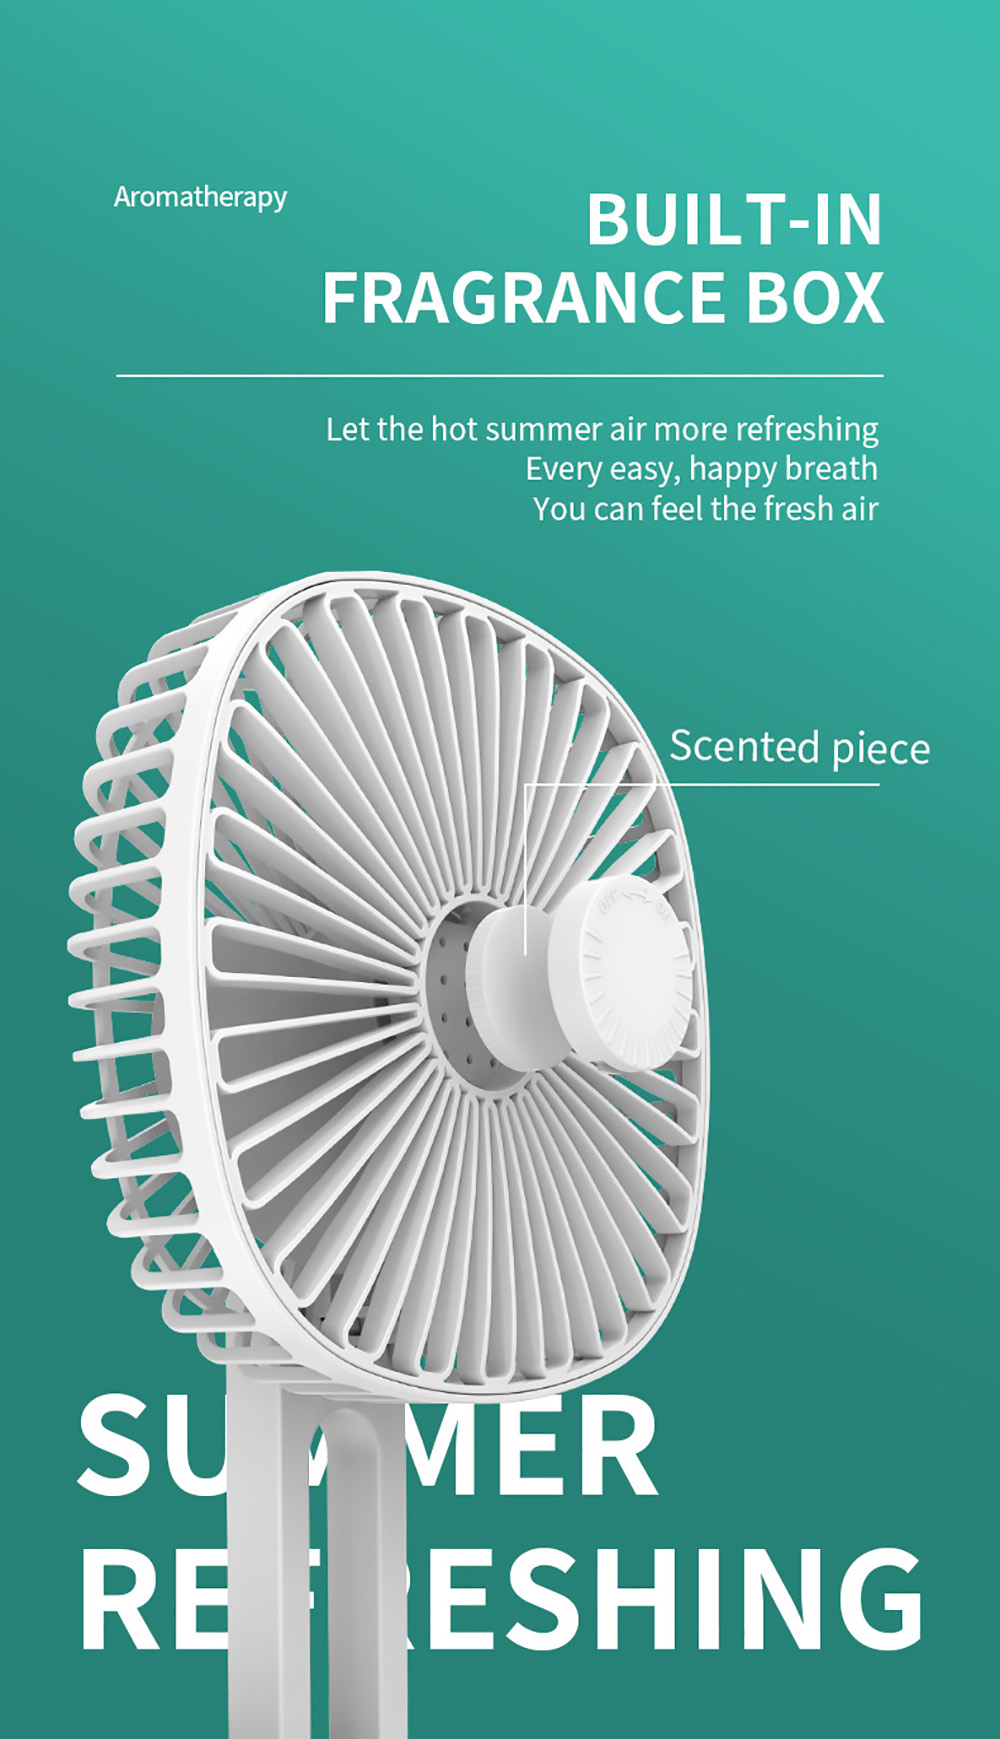 Multifunction Folding Fan, 3 Levels Speed, Aromatherapy Cooling Fan, 1200mAh Battery, USB Charging, Low Noise - White